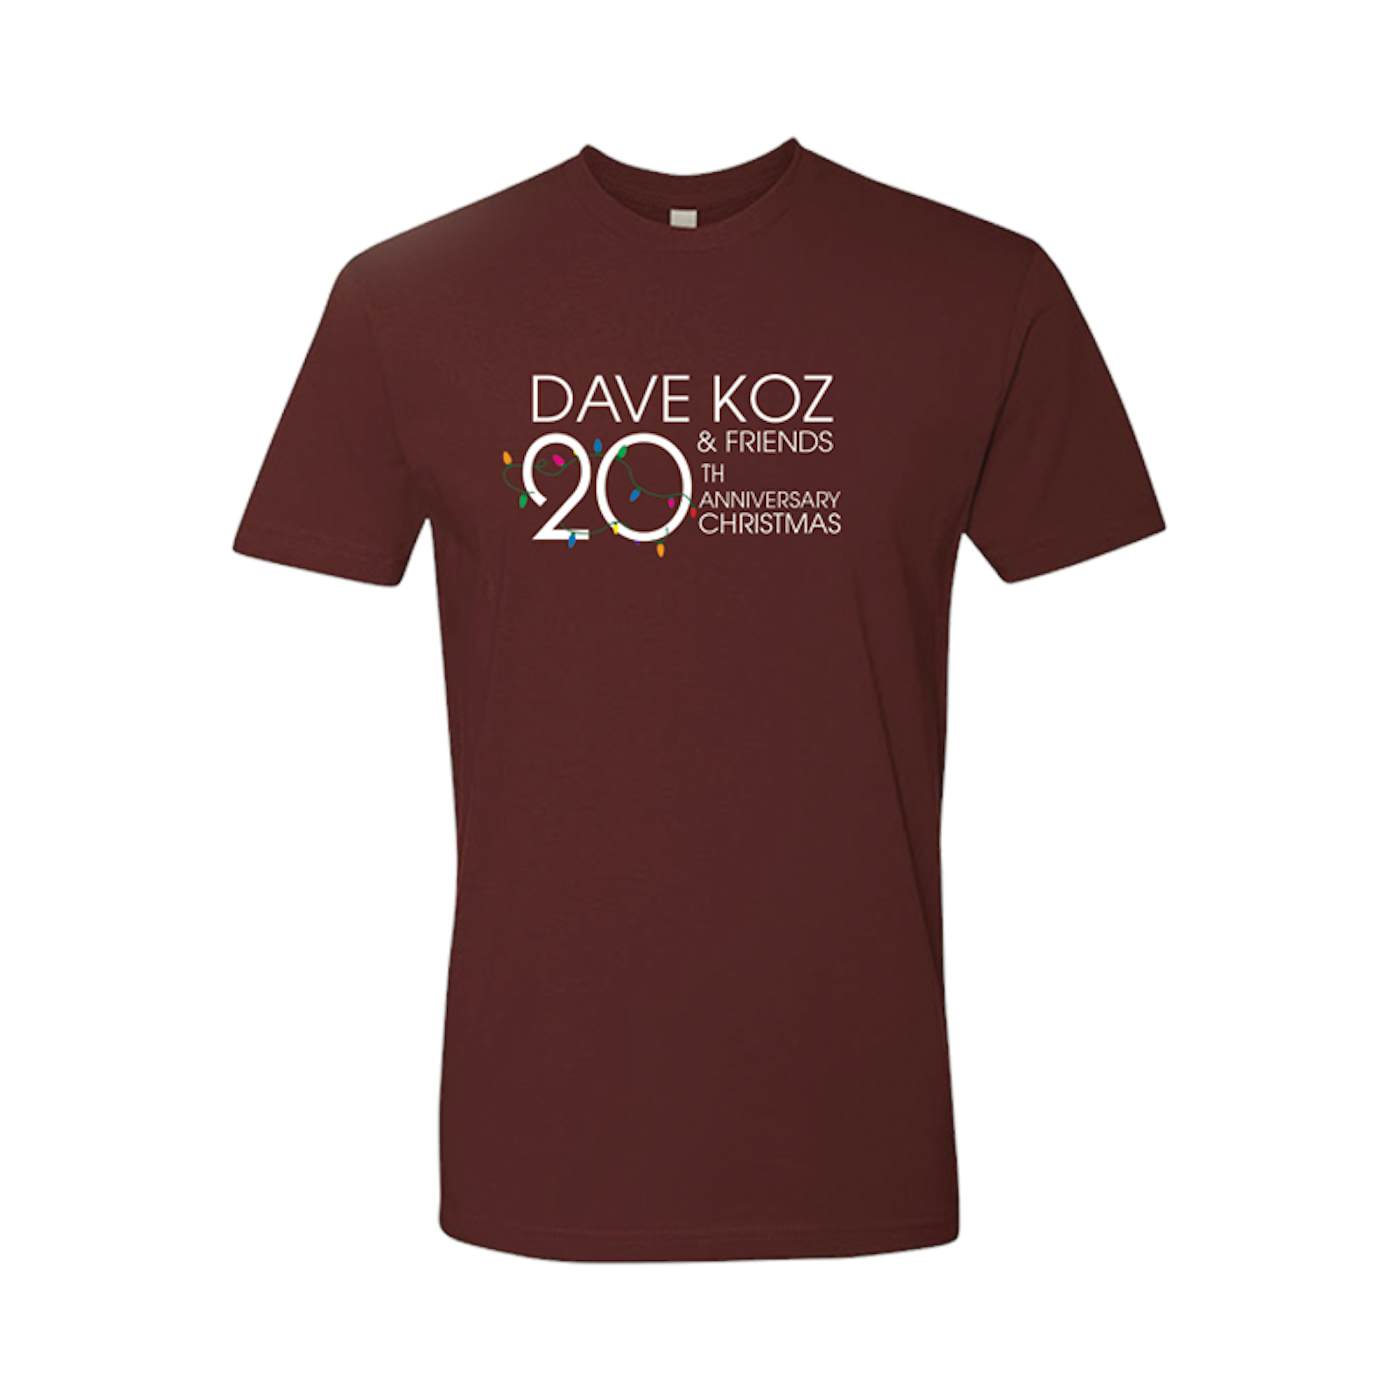 Dave Koz 20th Anniversary Christmas T-Shirt